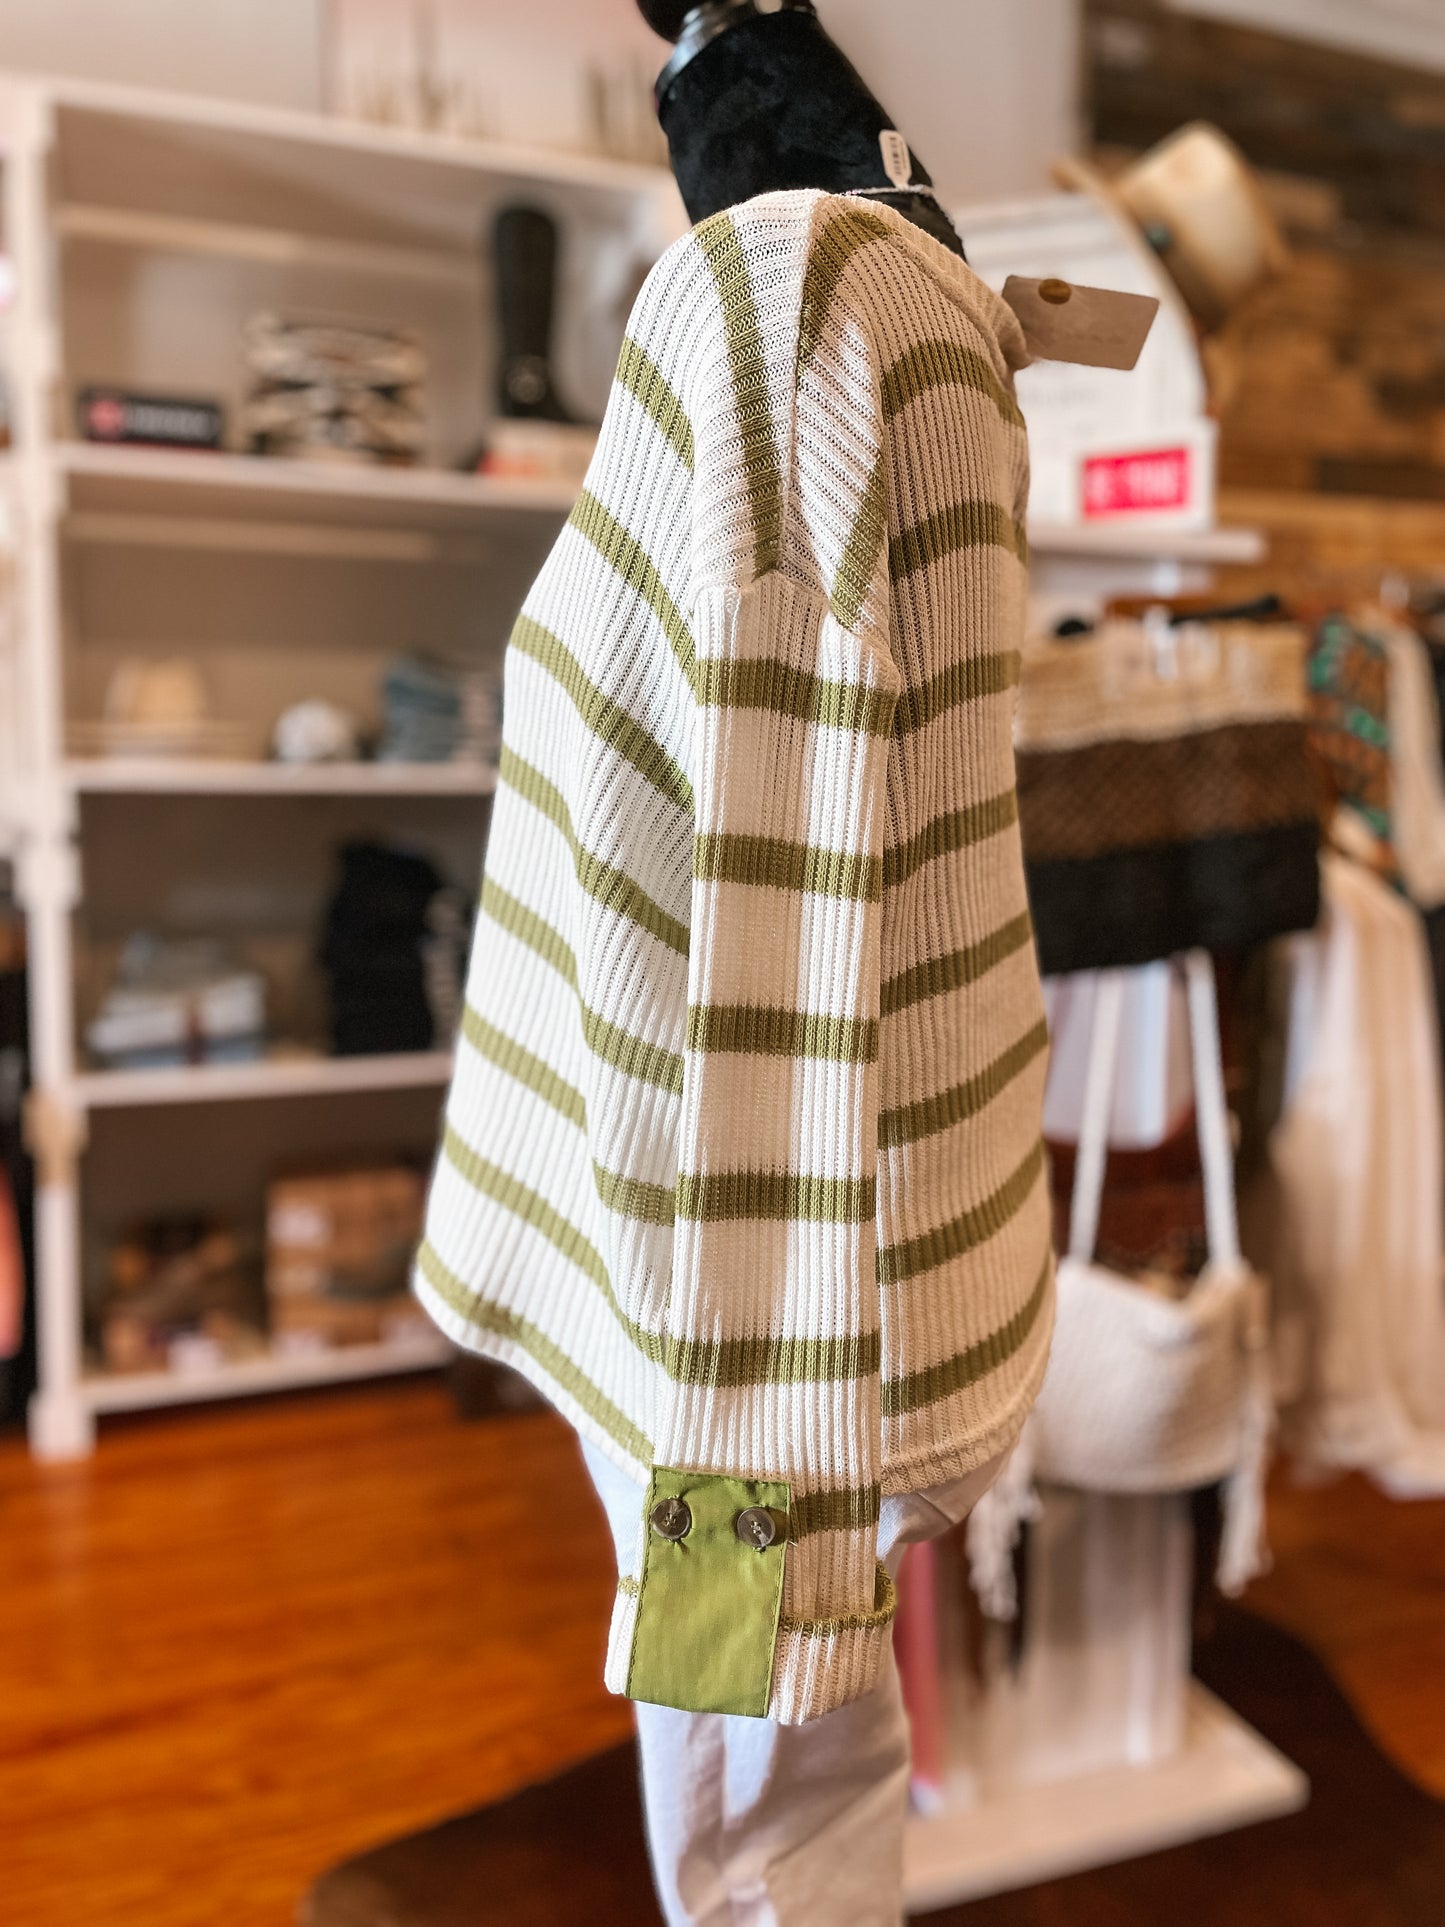 Striped Light Weight Knit Top